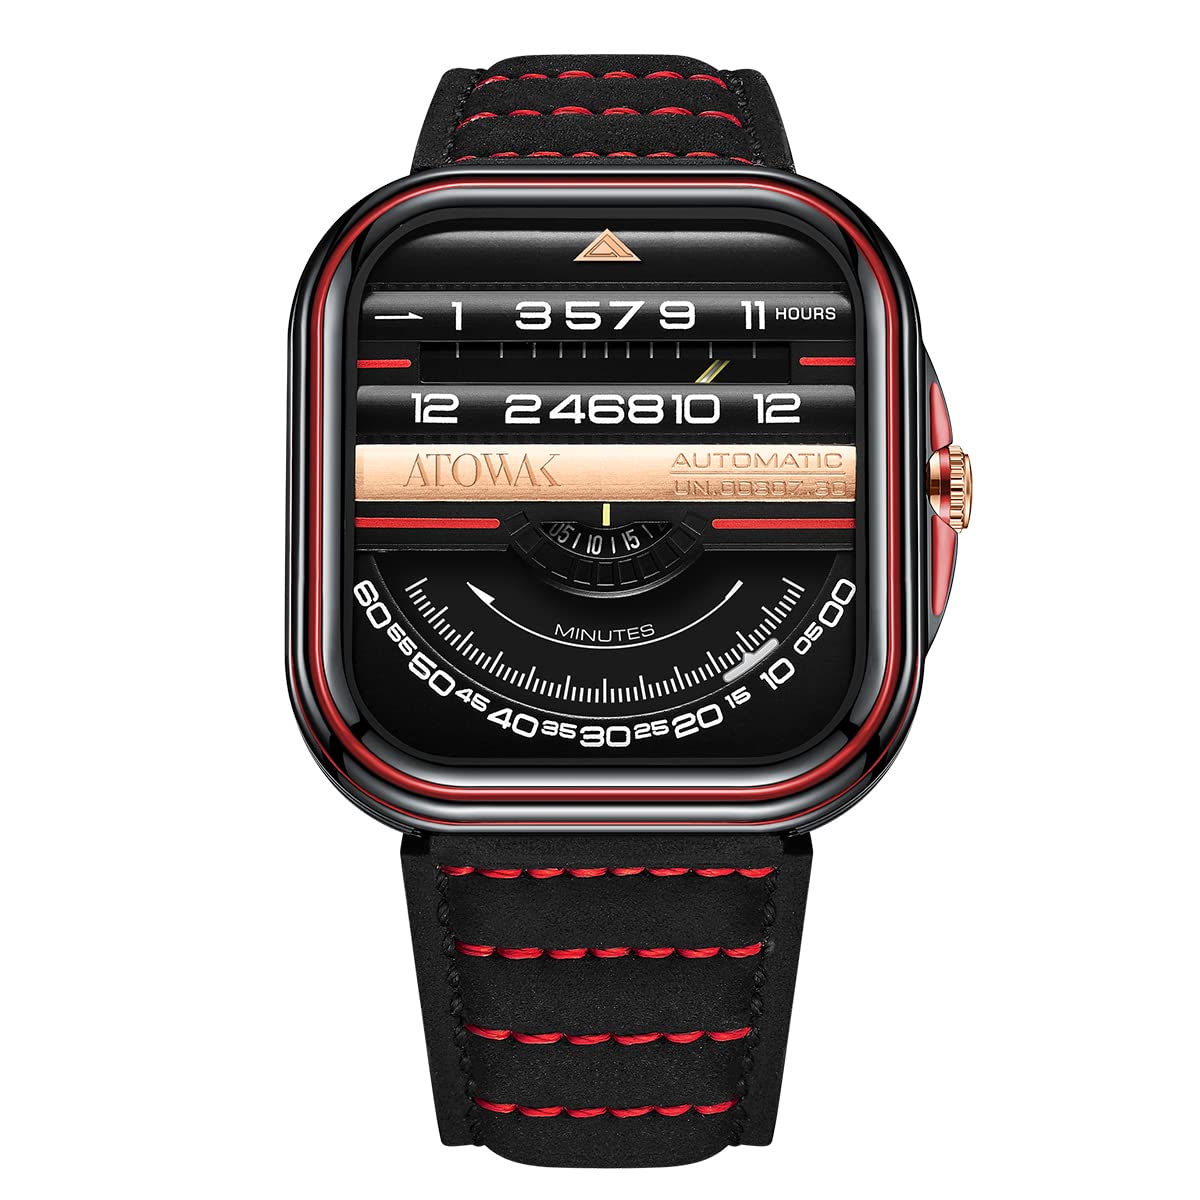 Atowak Windows Series Pro Automatic Mechanical Watch Stainless Steel Analog Sport Square Luxury Watch Reloj with Genuine Leat